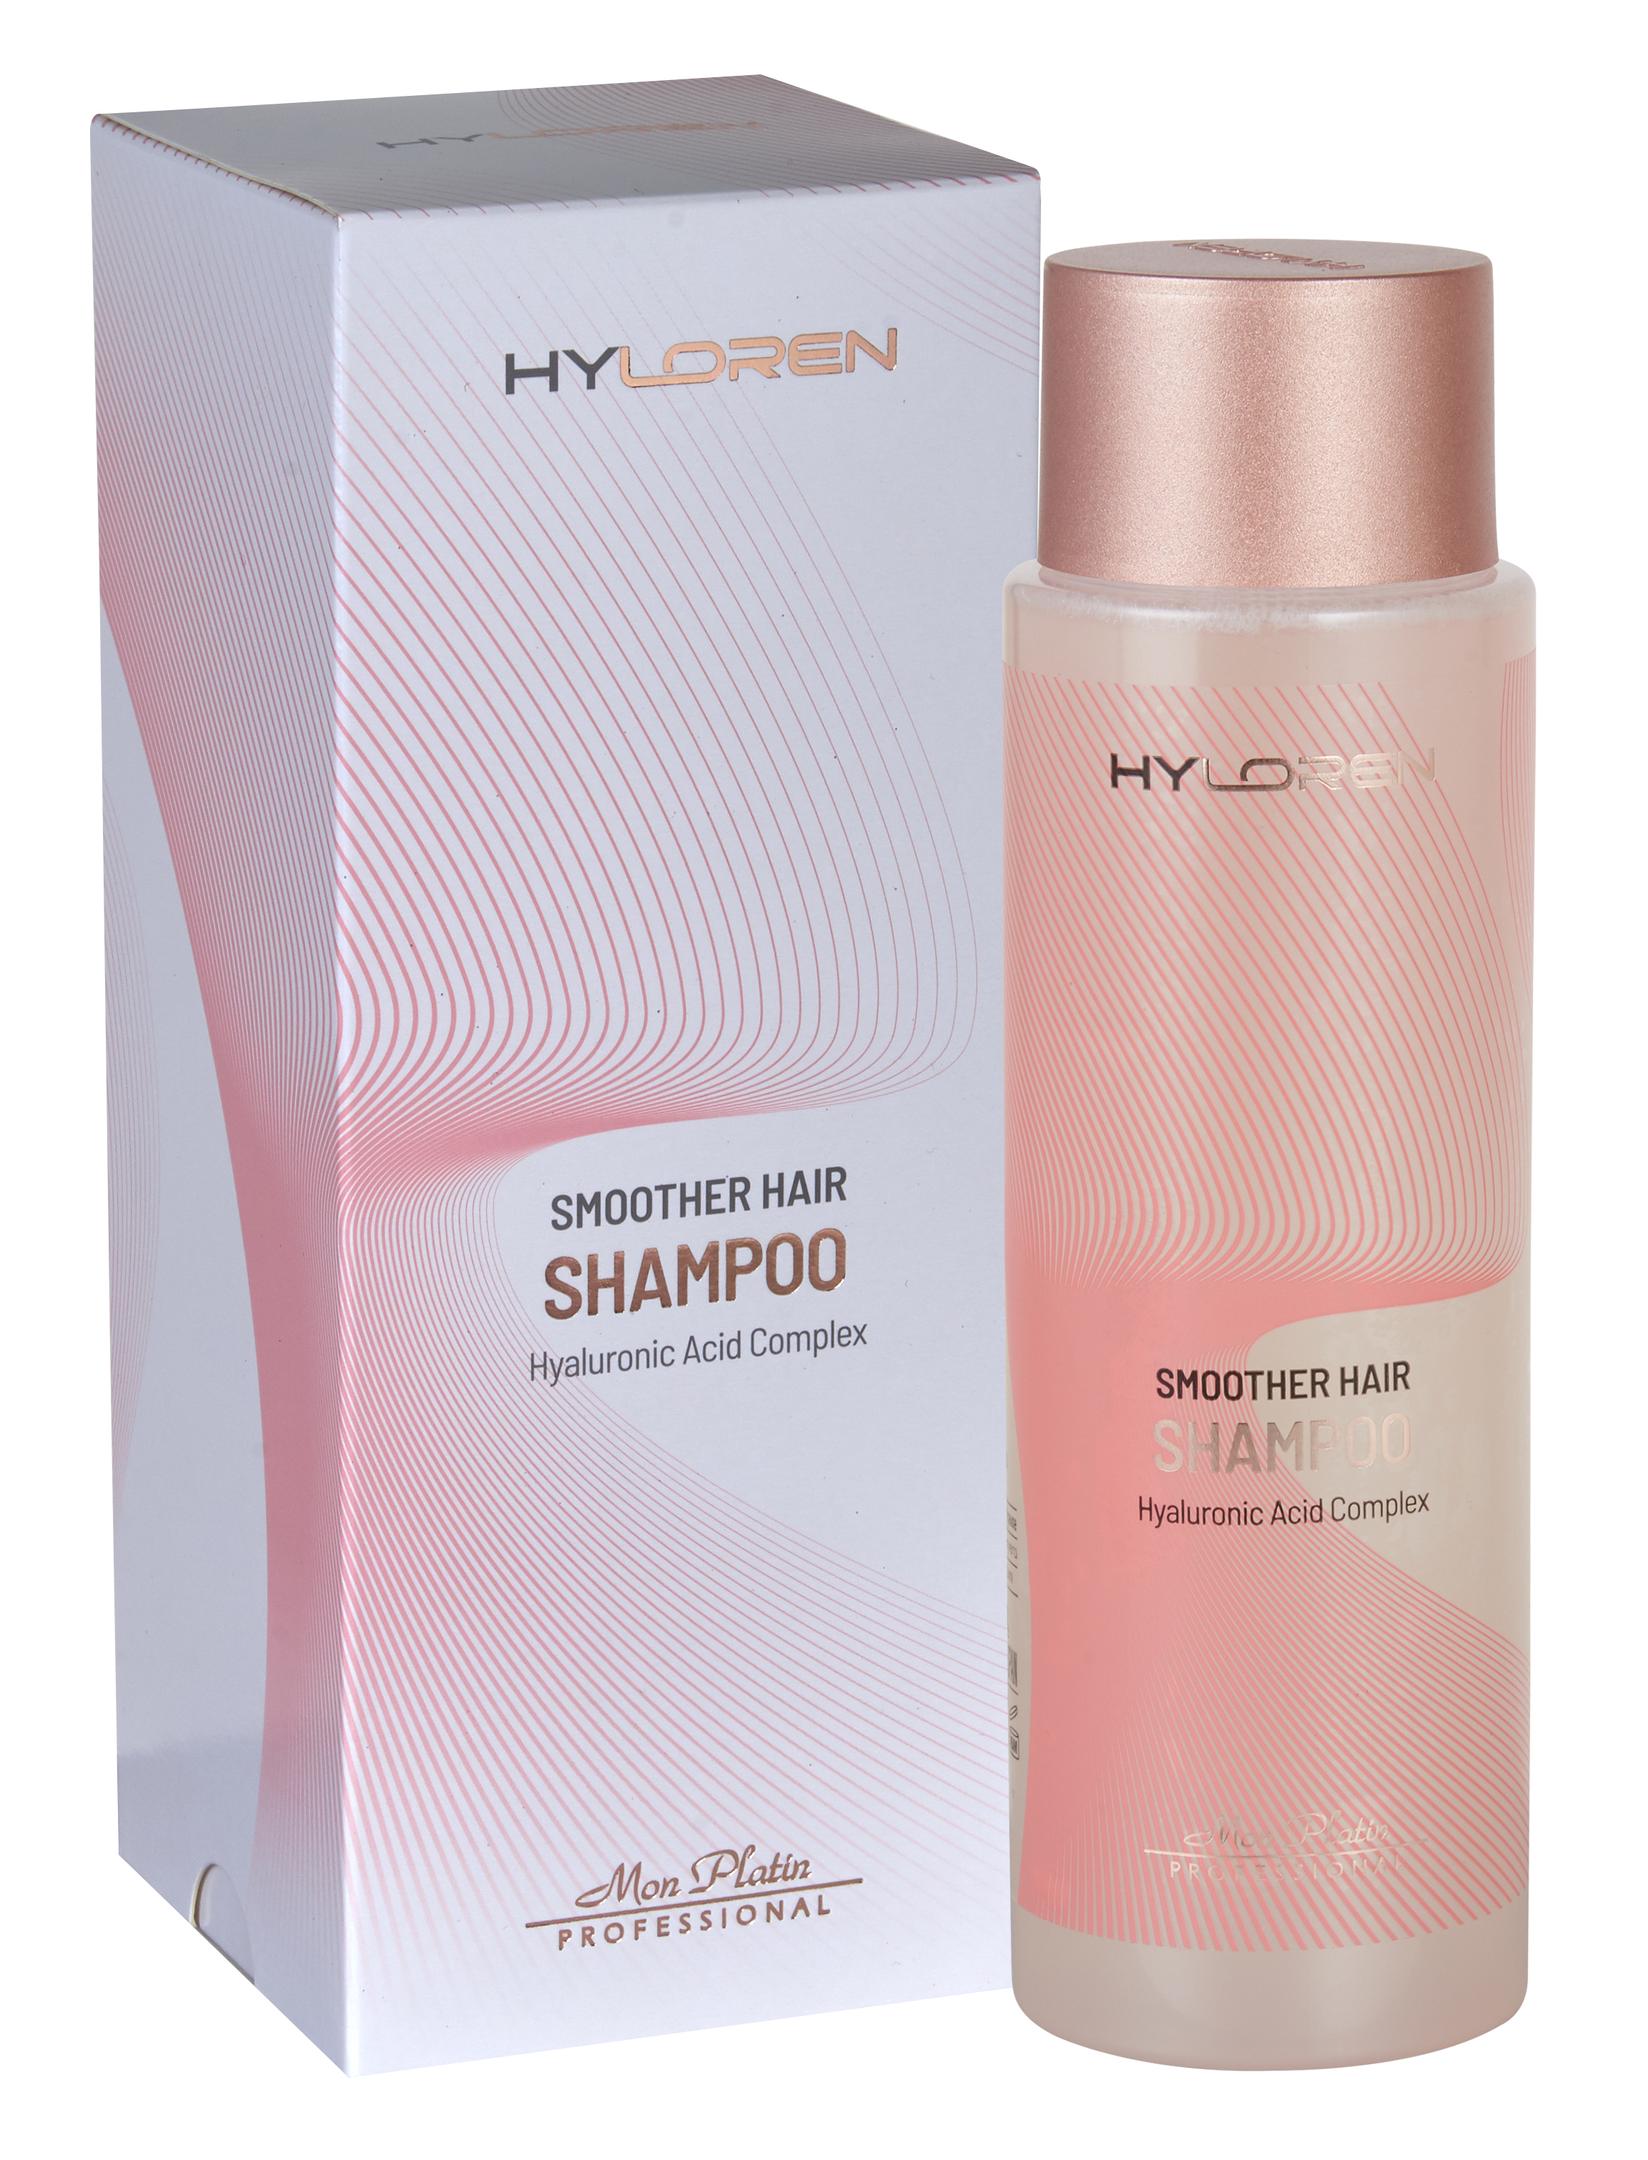 MON PLATIN Šampon Hyloren Premium Hair Smoother 500ml